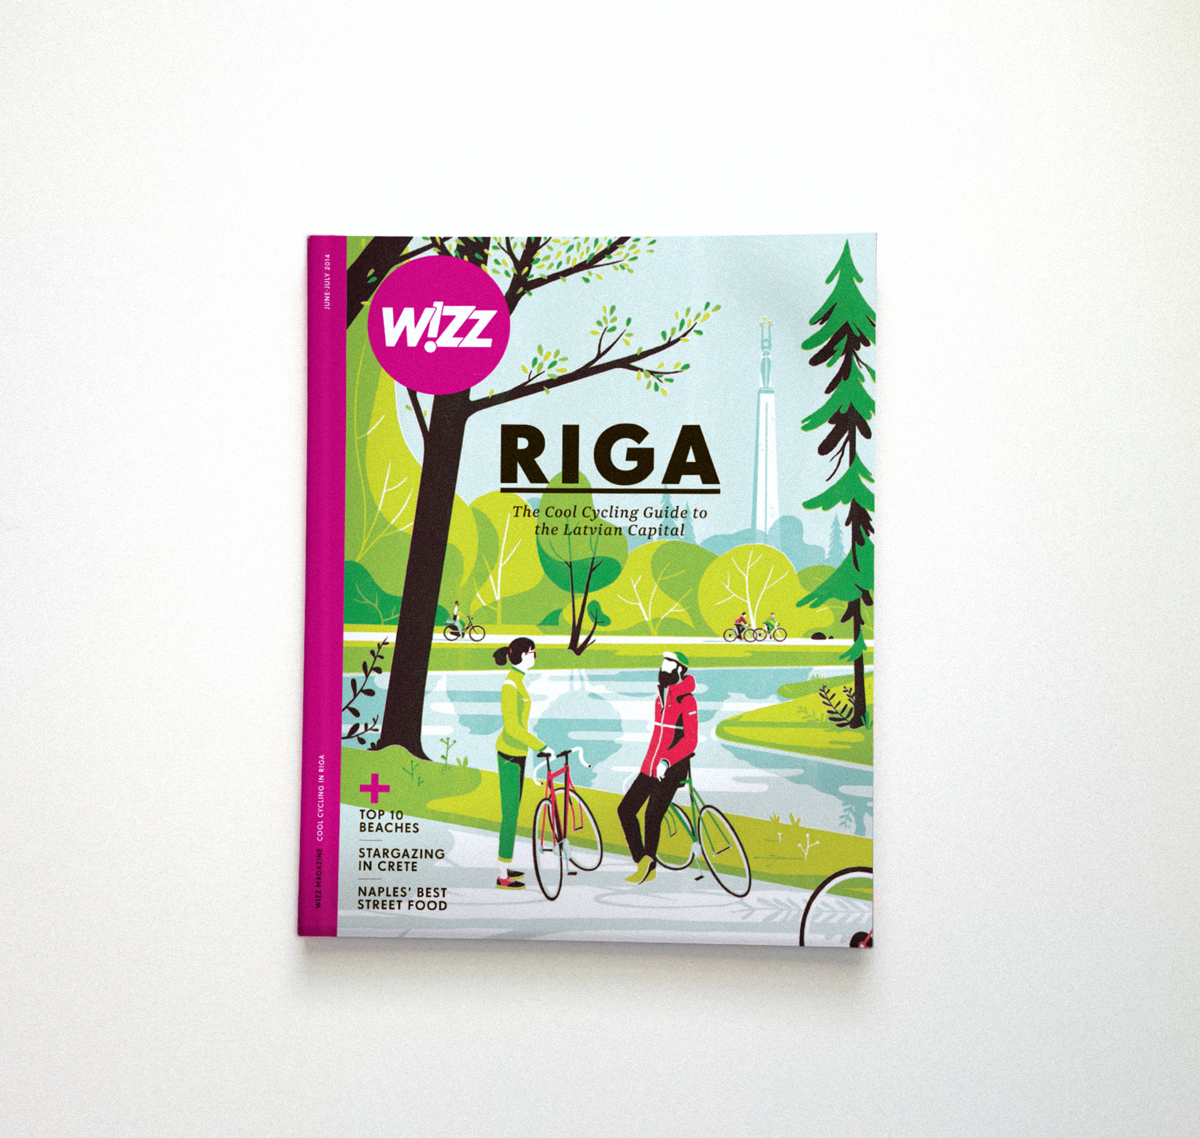 Riga Bike wizz